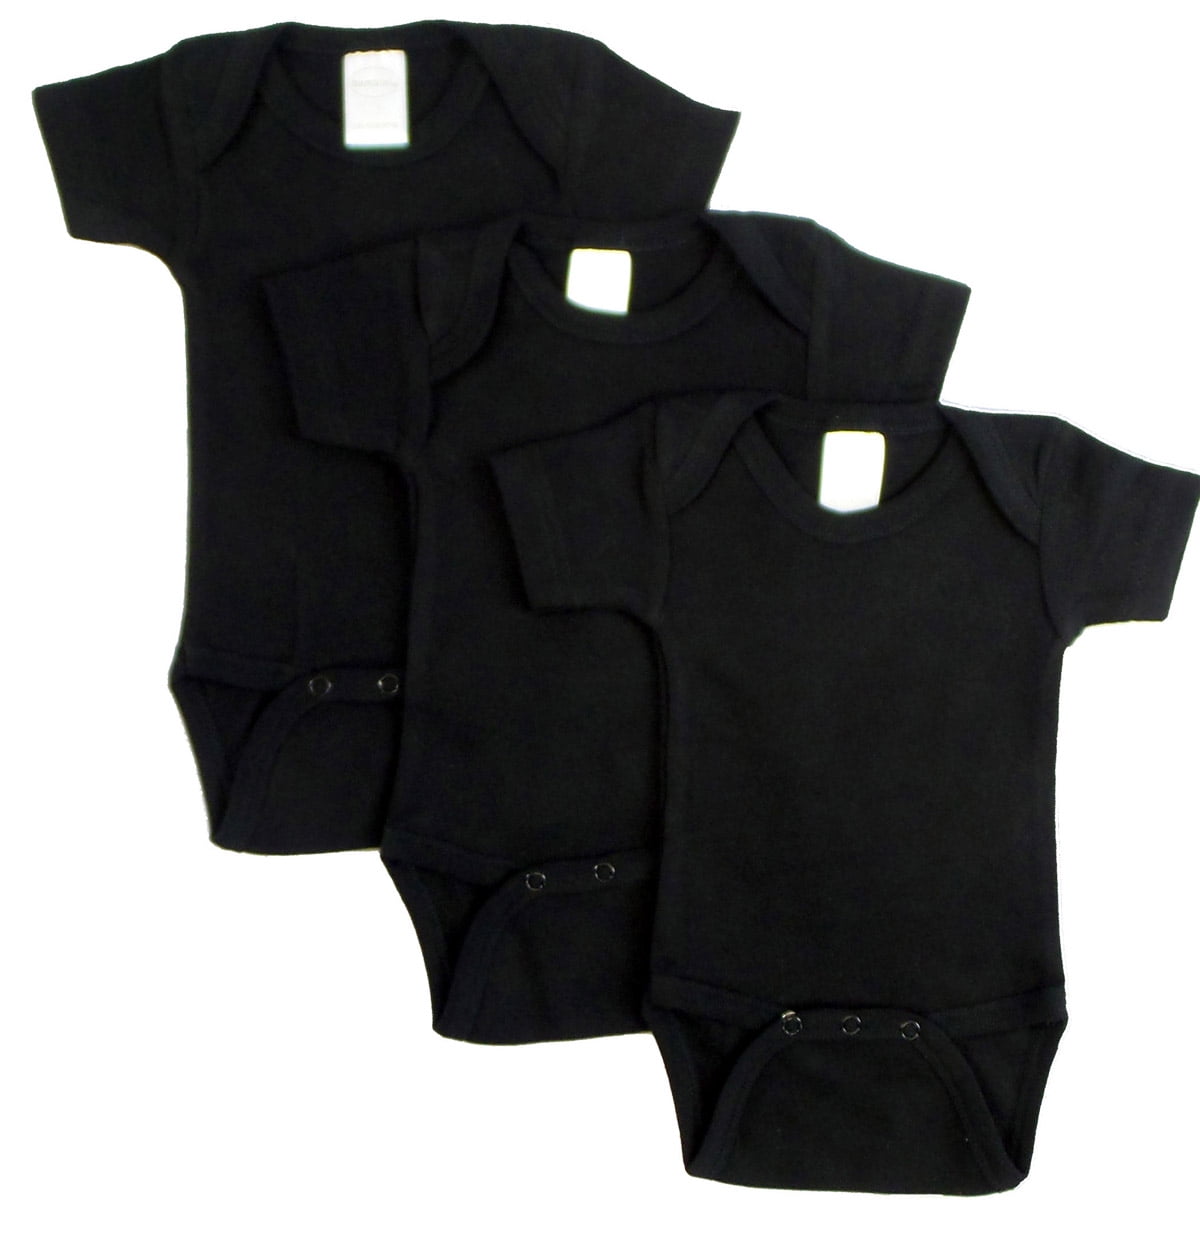 Short Sleeve - Black, Large - Pack Of 3